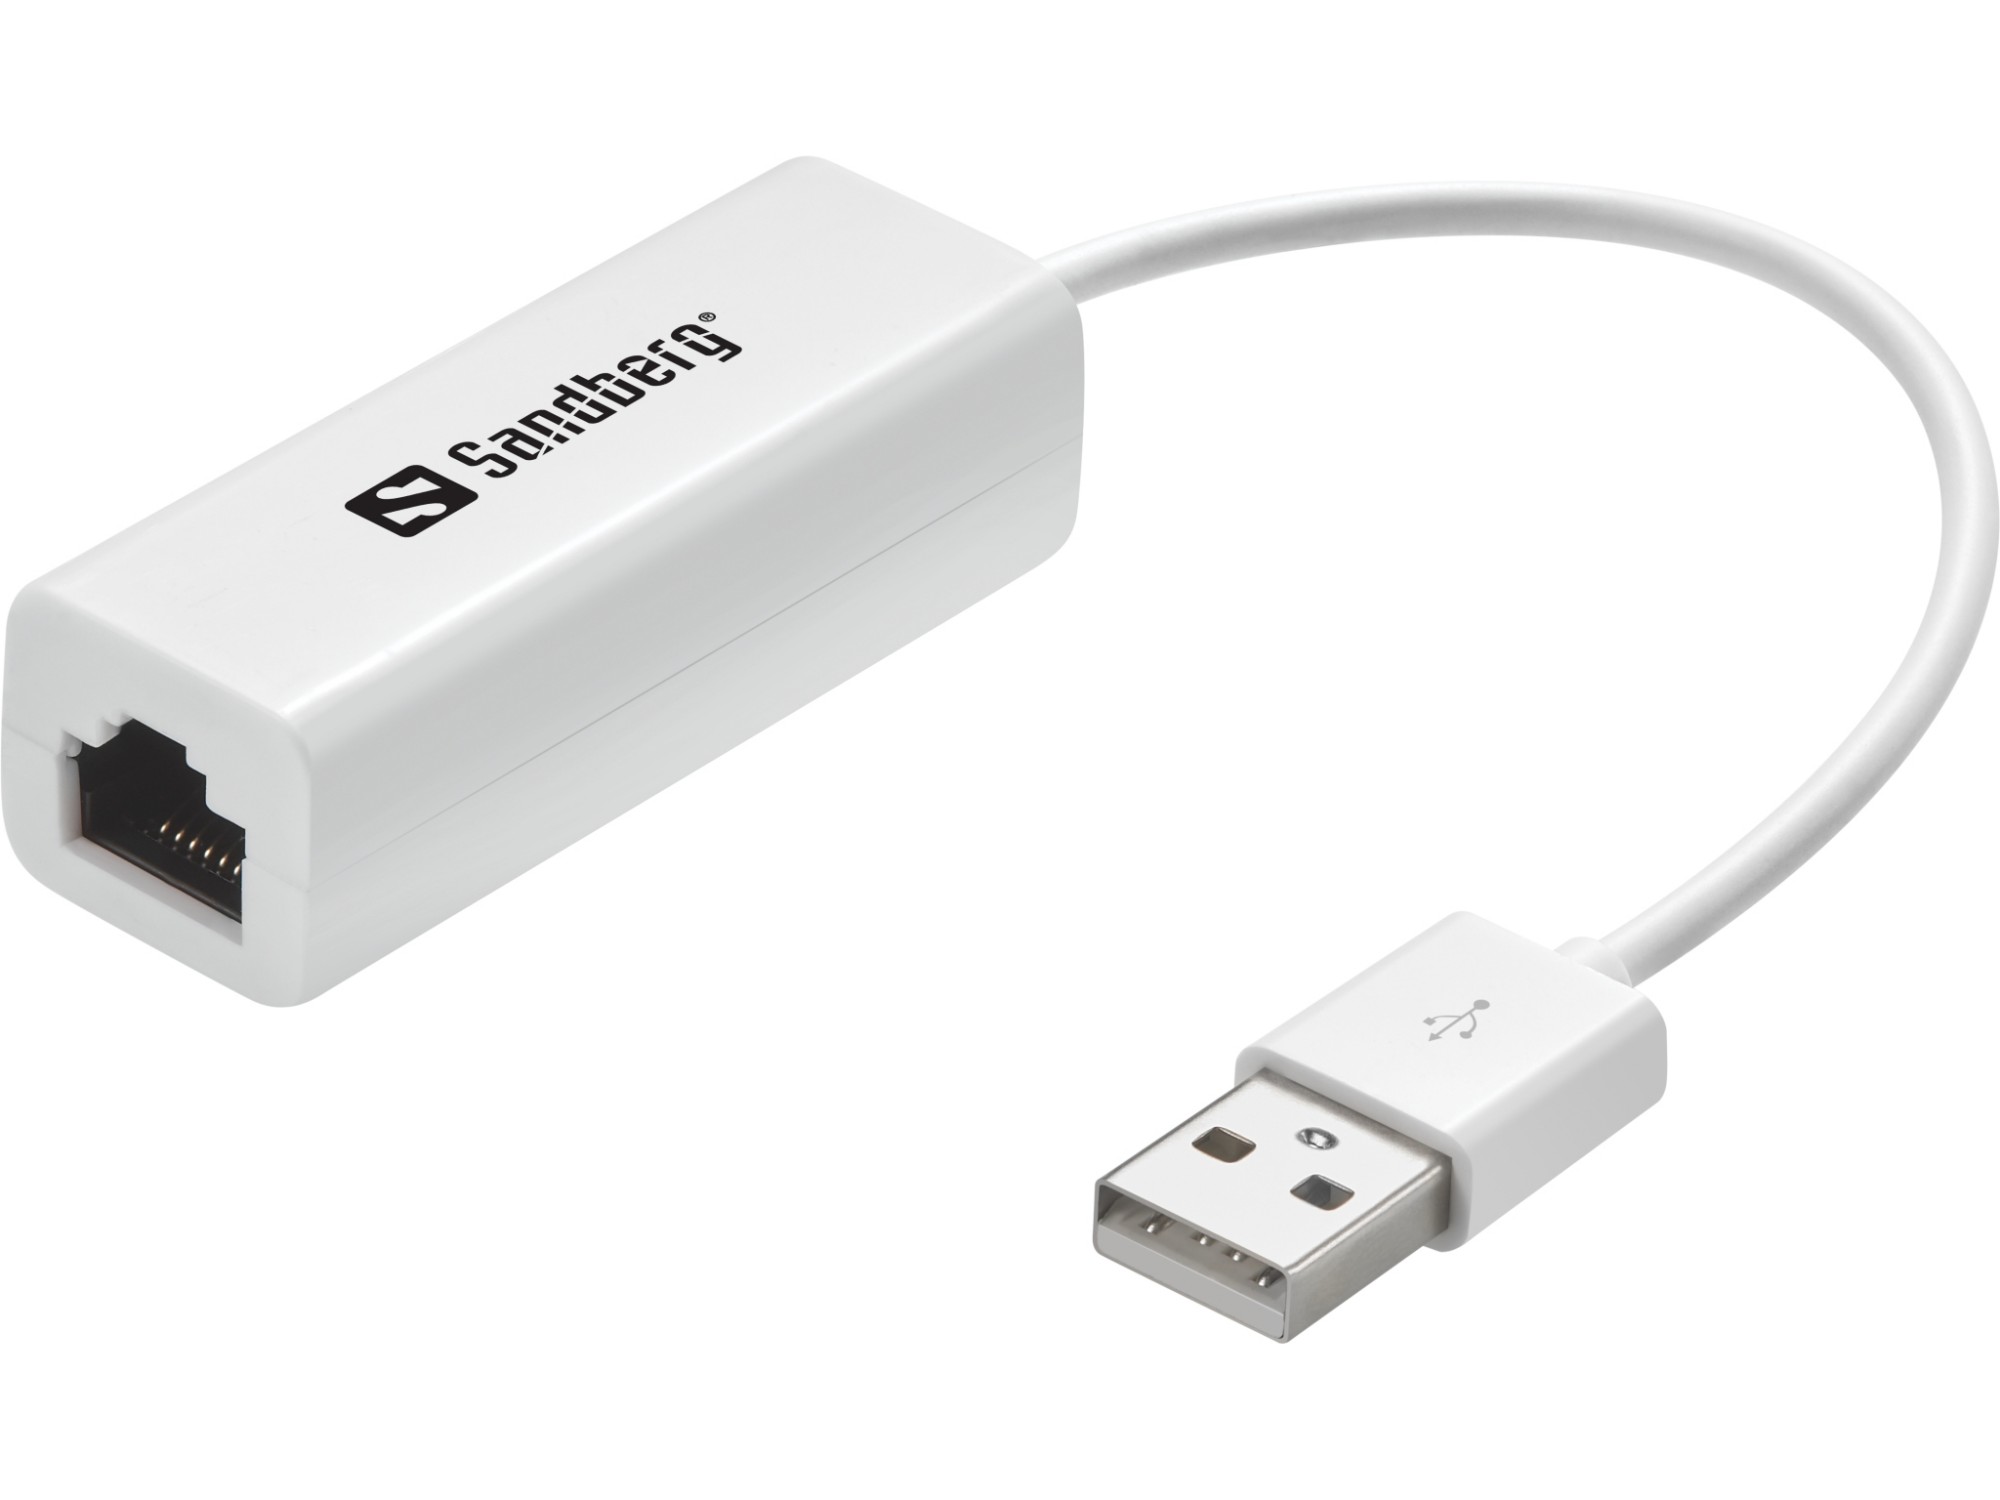 Photos - Network Card Sandberg USB to Network Converter 133-78 